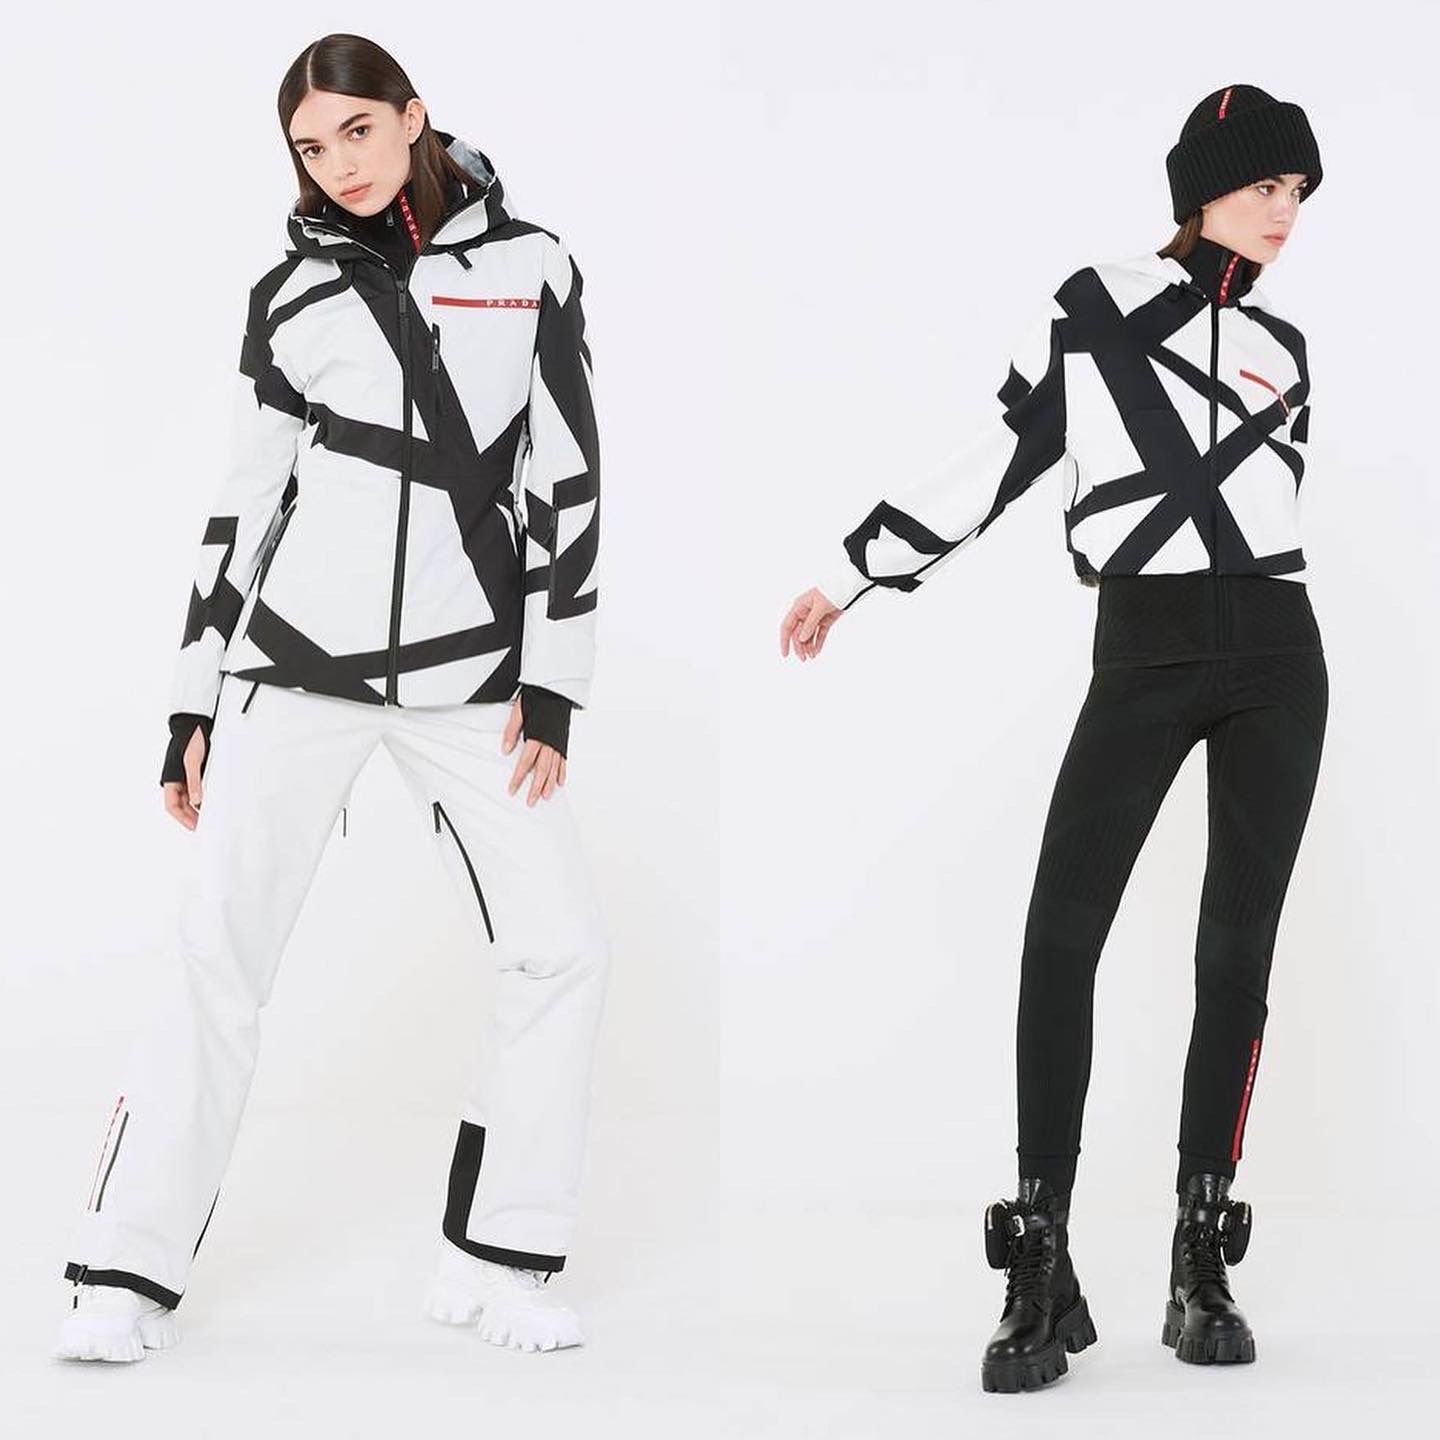 prada aspenx skiwear collaboration outerwear jackets sustainable release date fabiola kassin hypnotique2